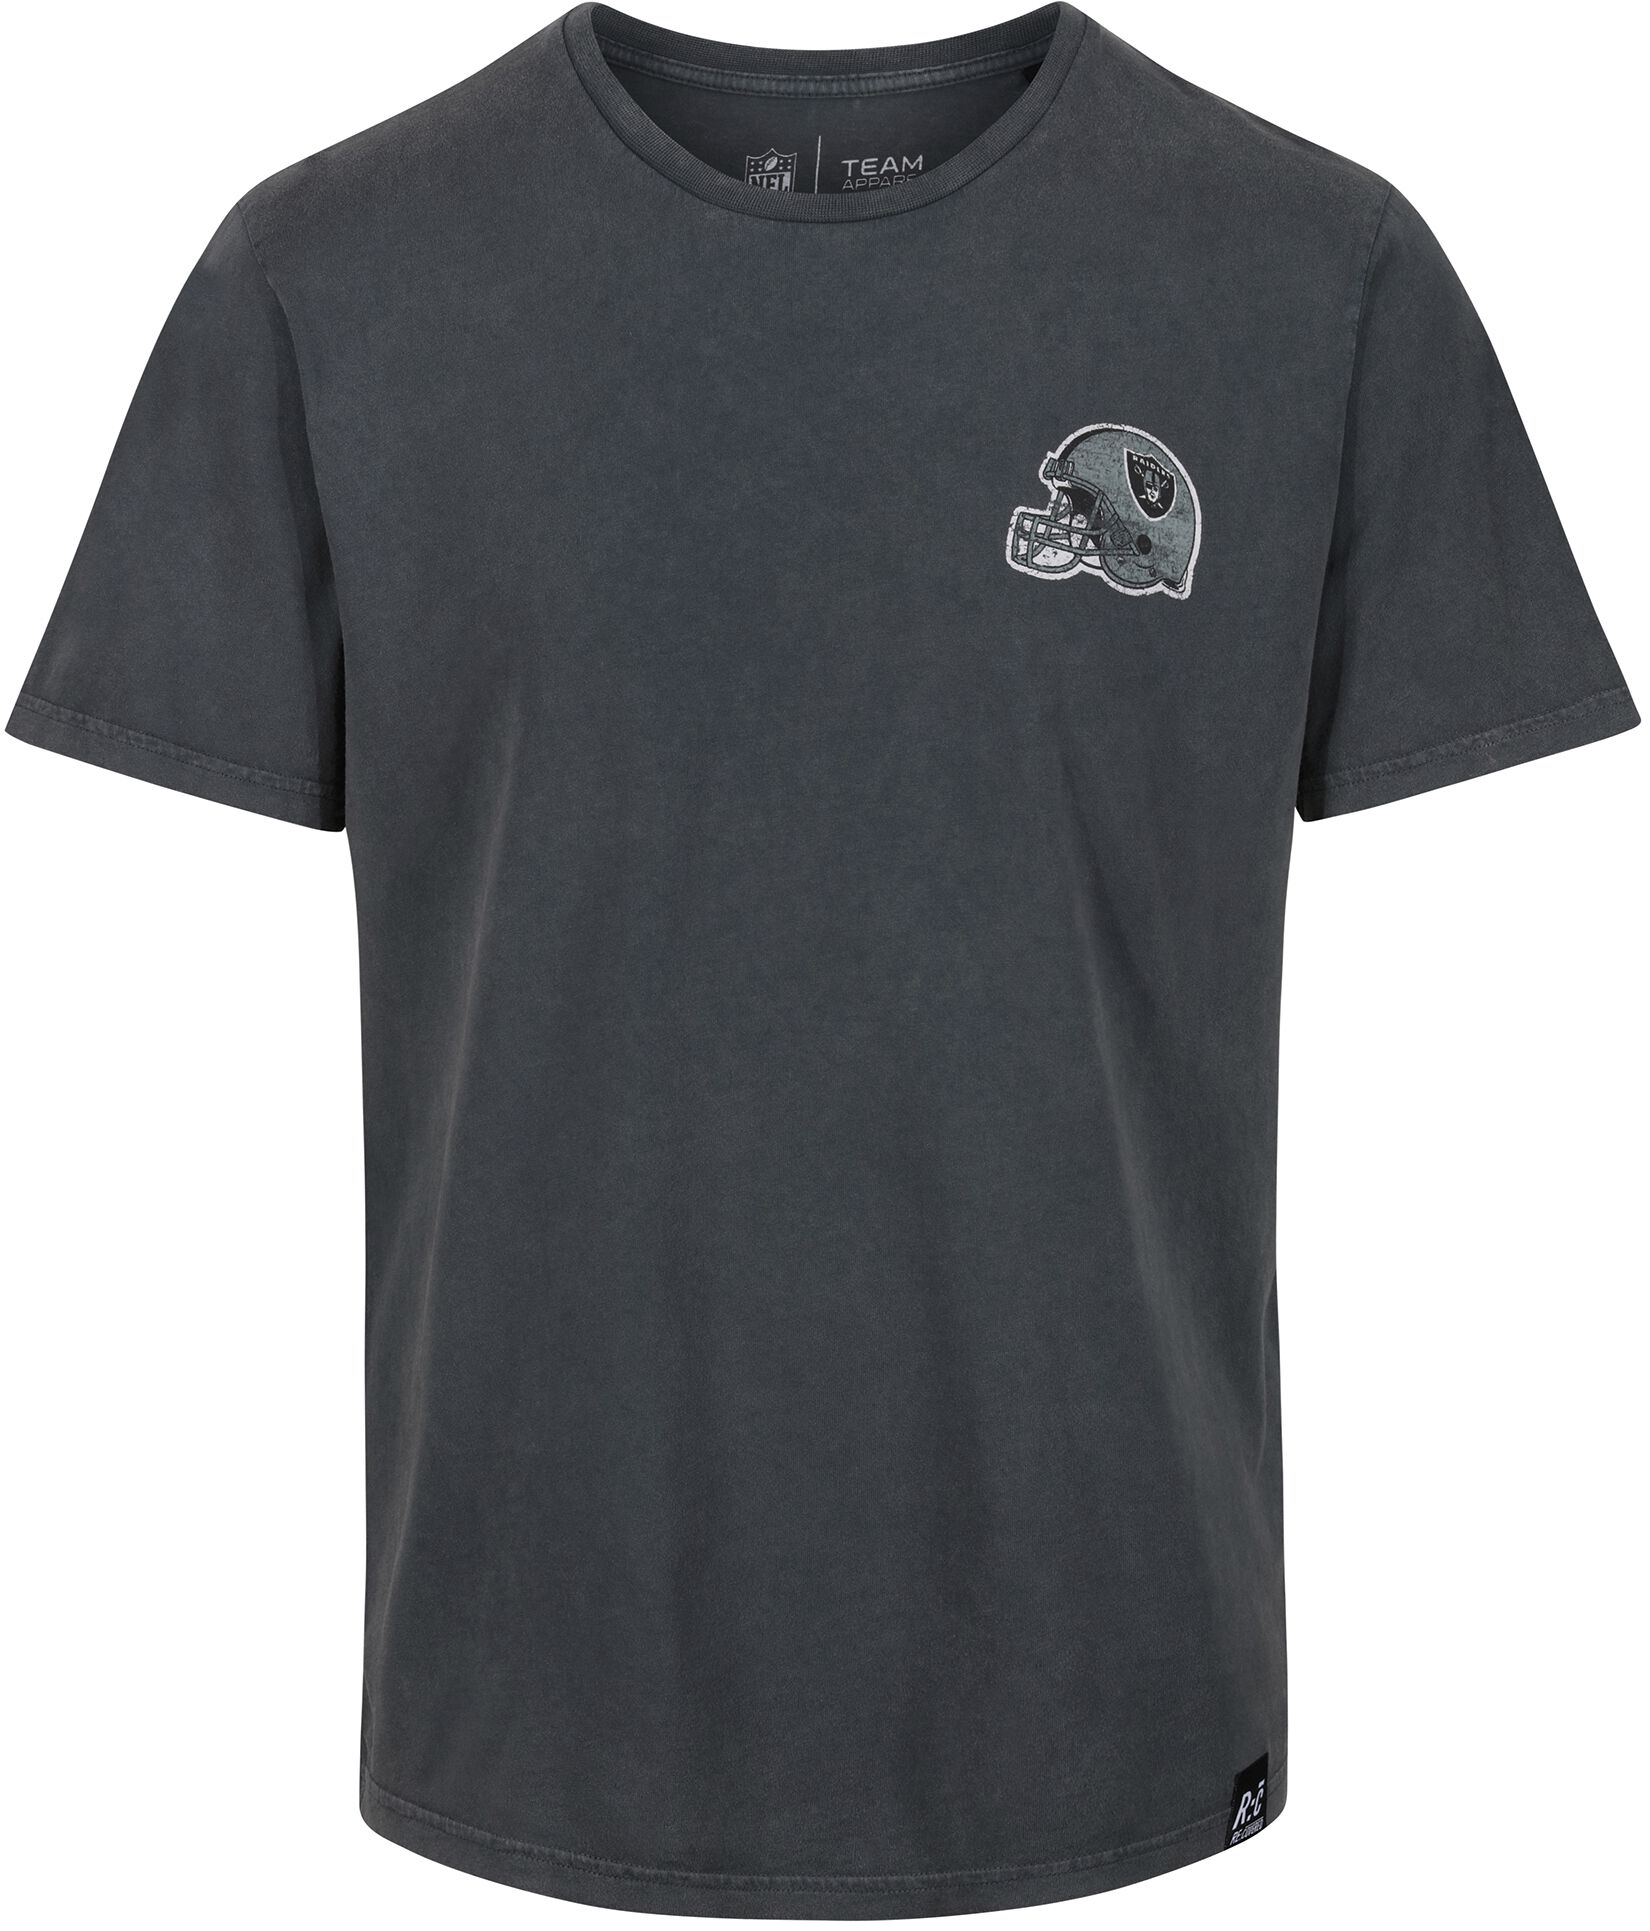 Recovered Clothing T-Shirt - NFL Raiders College Black Washed - S bis XXL - für Männer - Größe S - multicolor